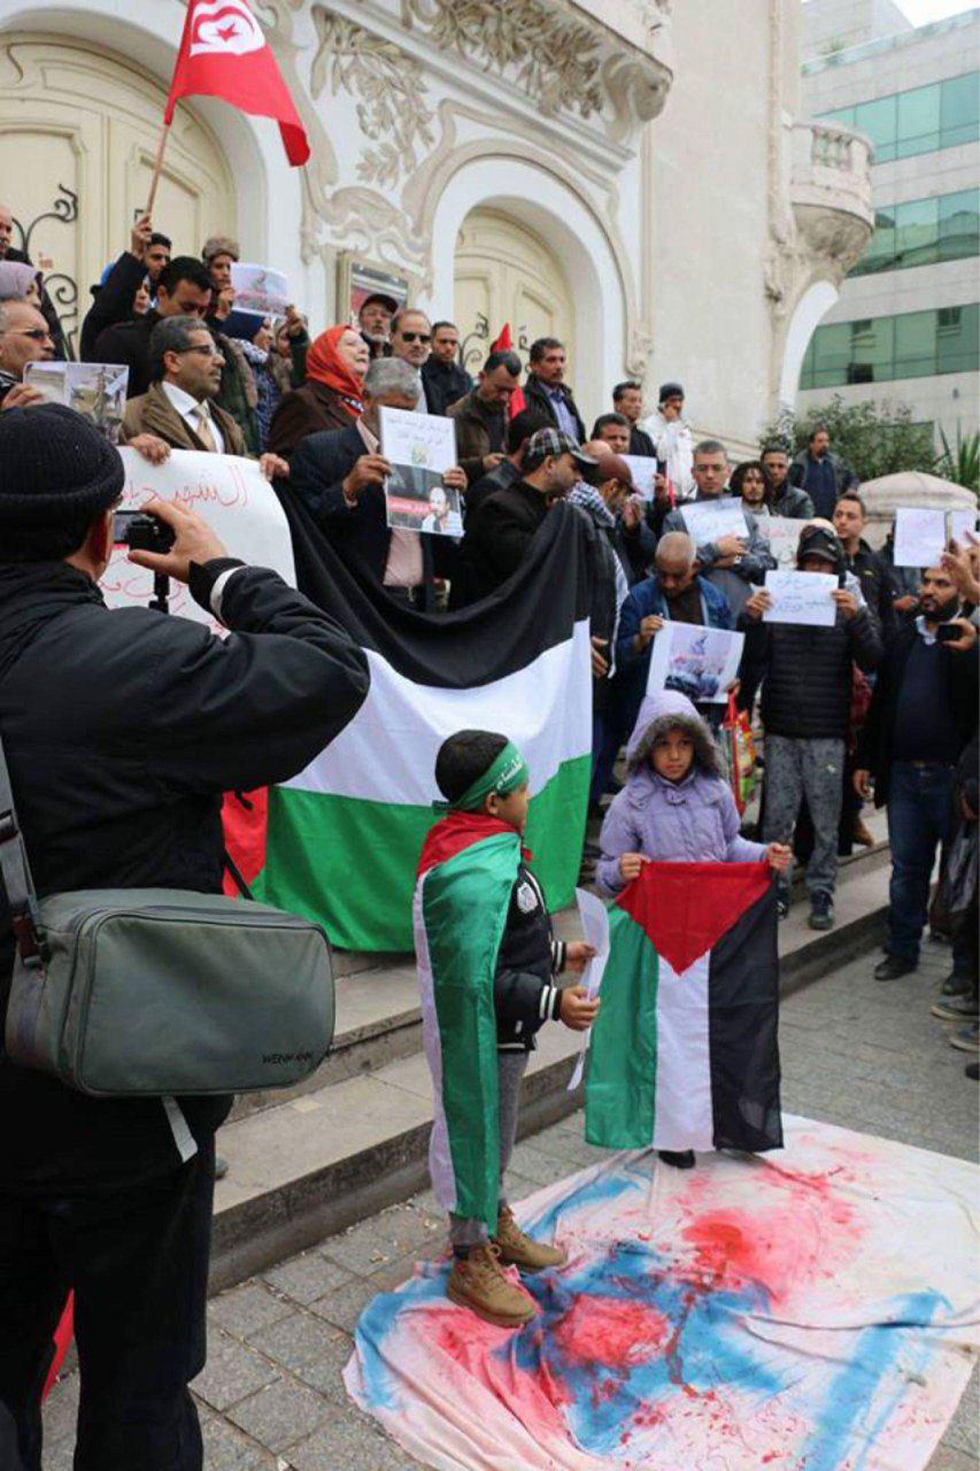 Demonstration blaming Israel for murder in Tunisia